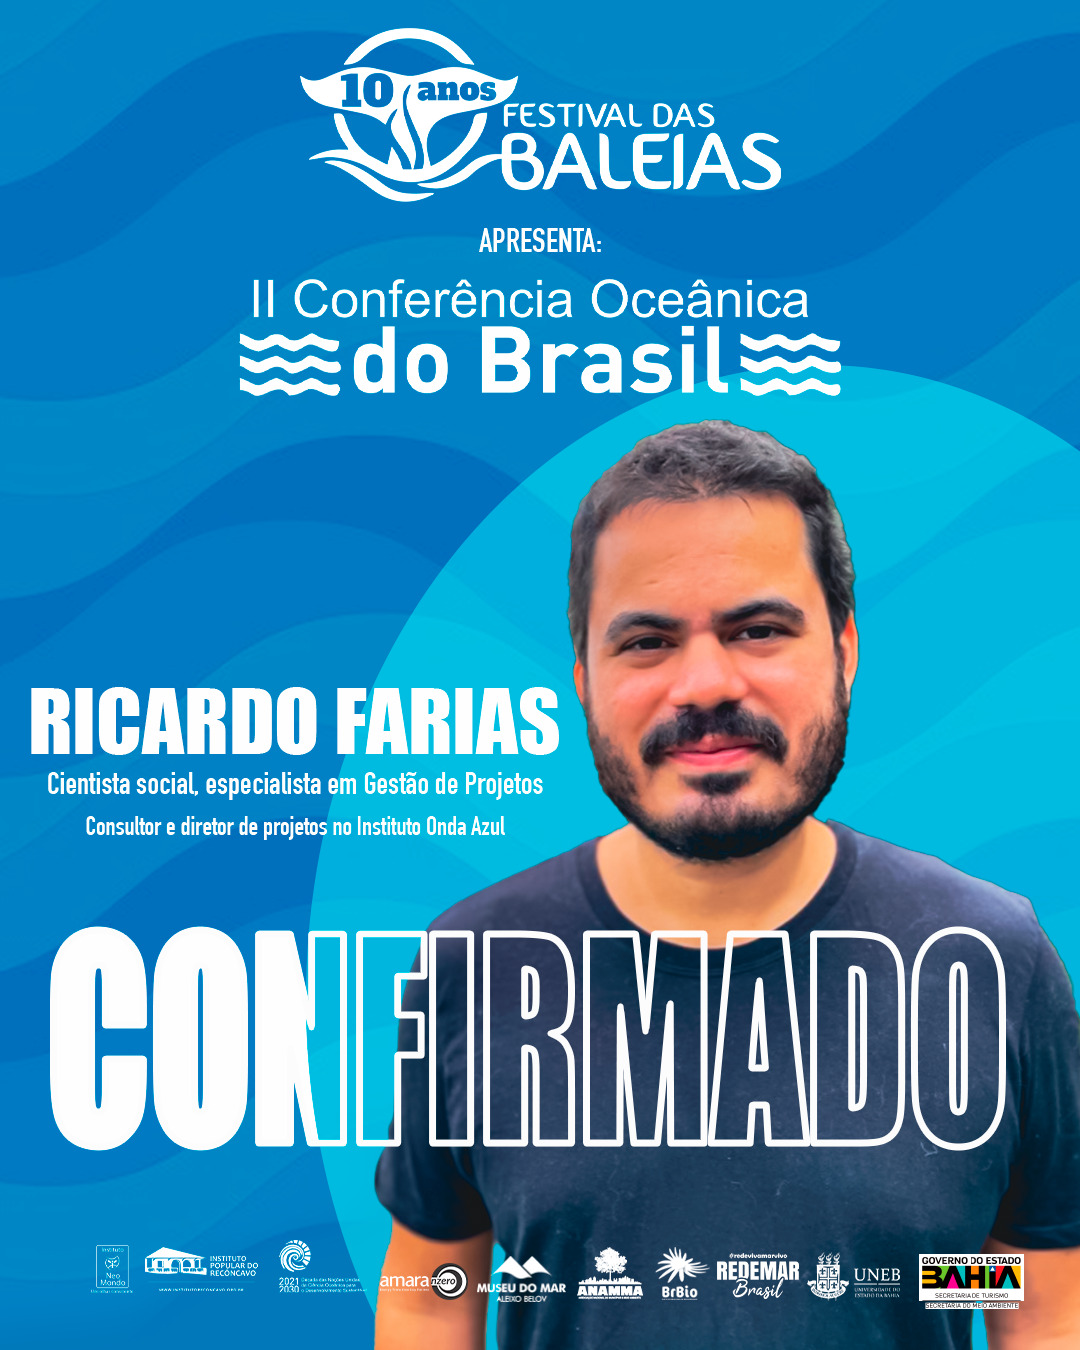 Ricardo Farias